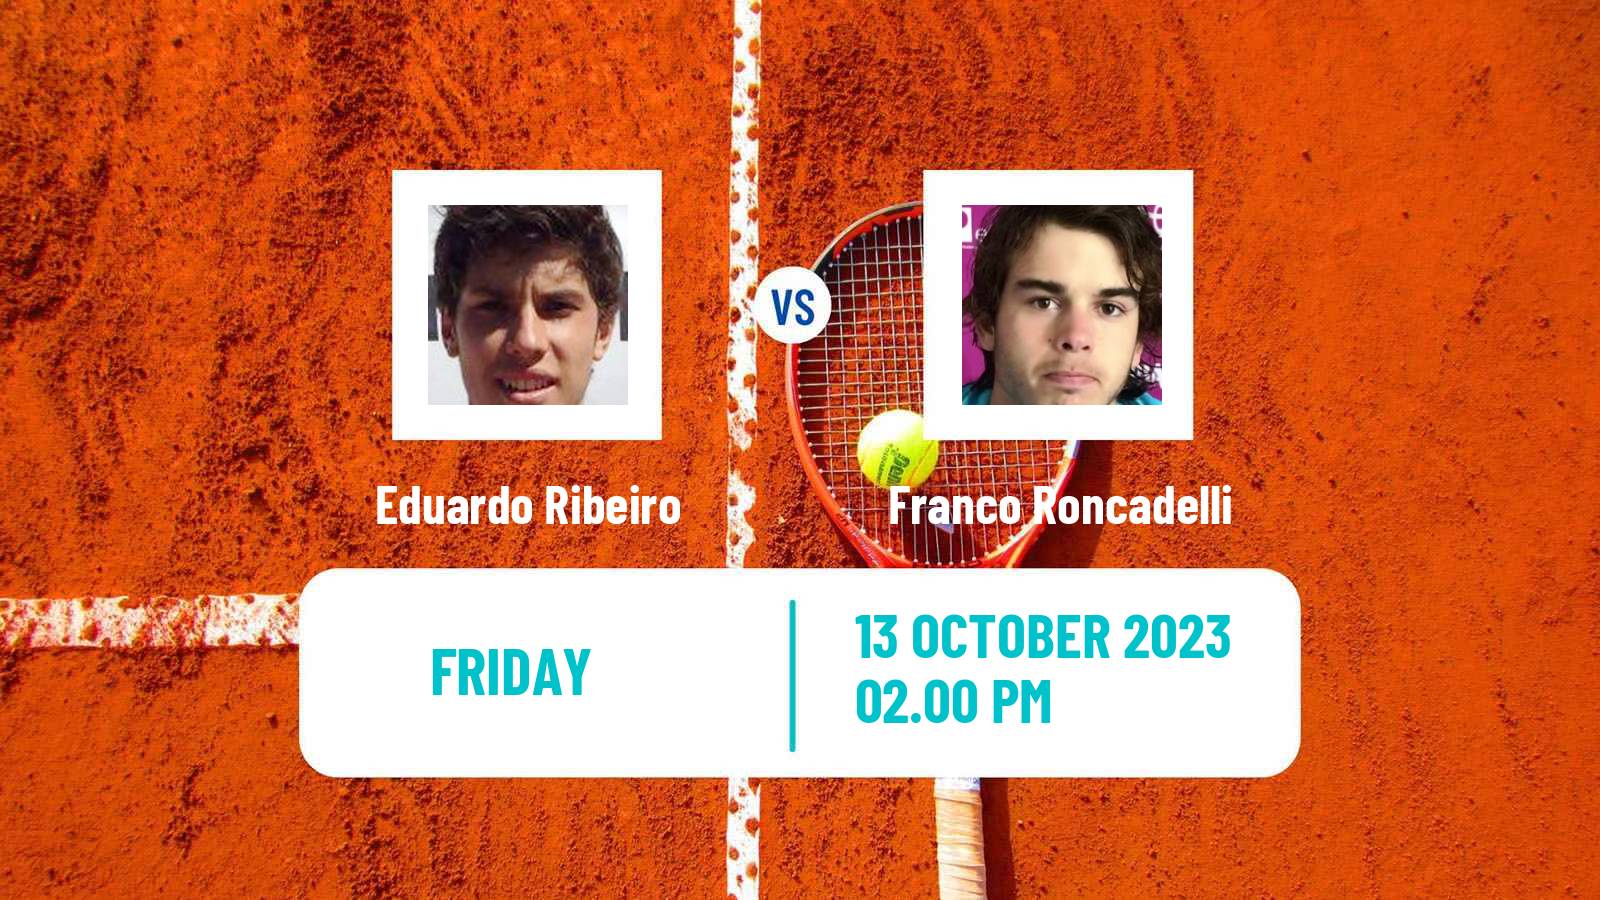 Tennis ITF M25 Lajeado Men Eduardo Ribeiro - Franco Roncadelli